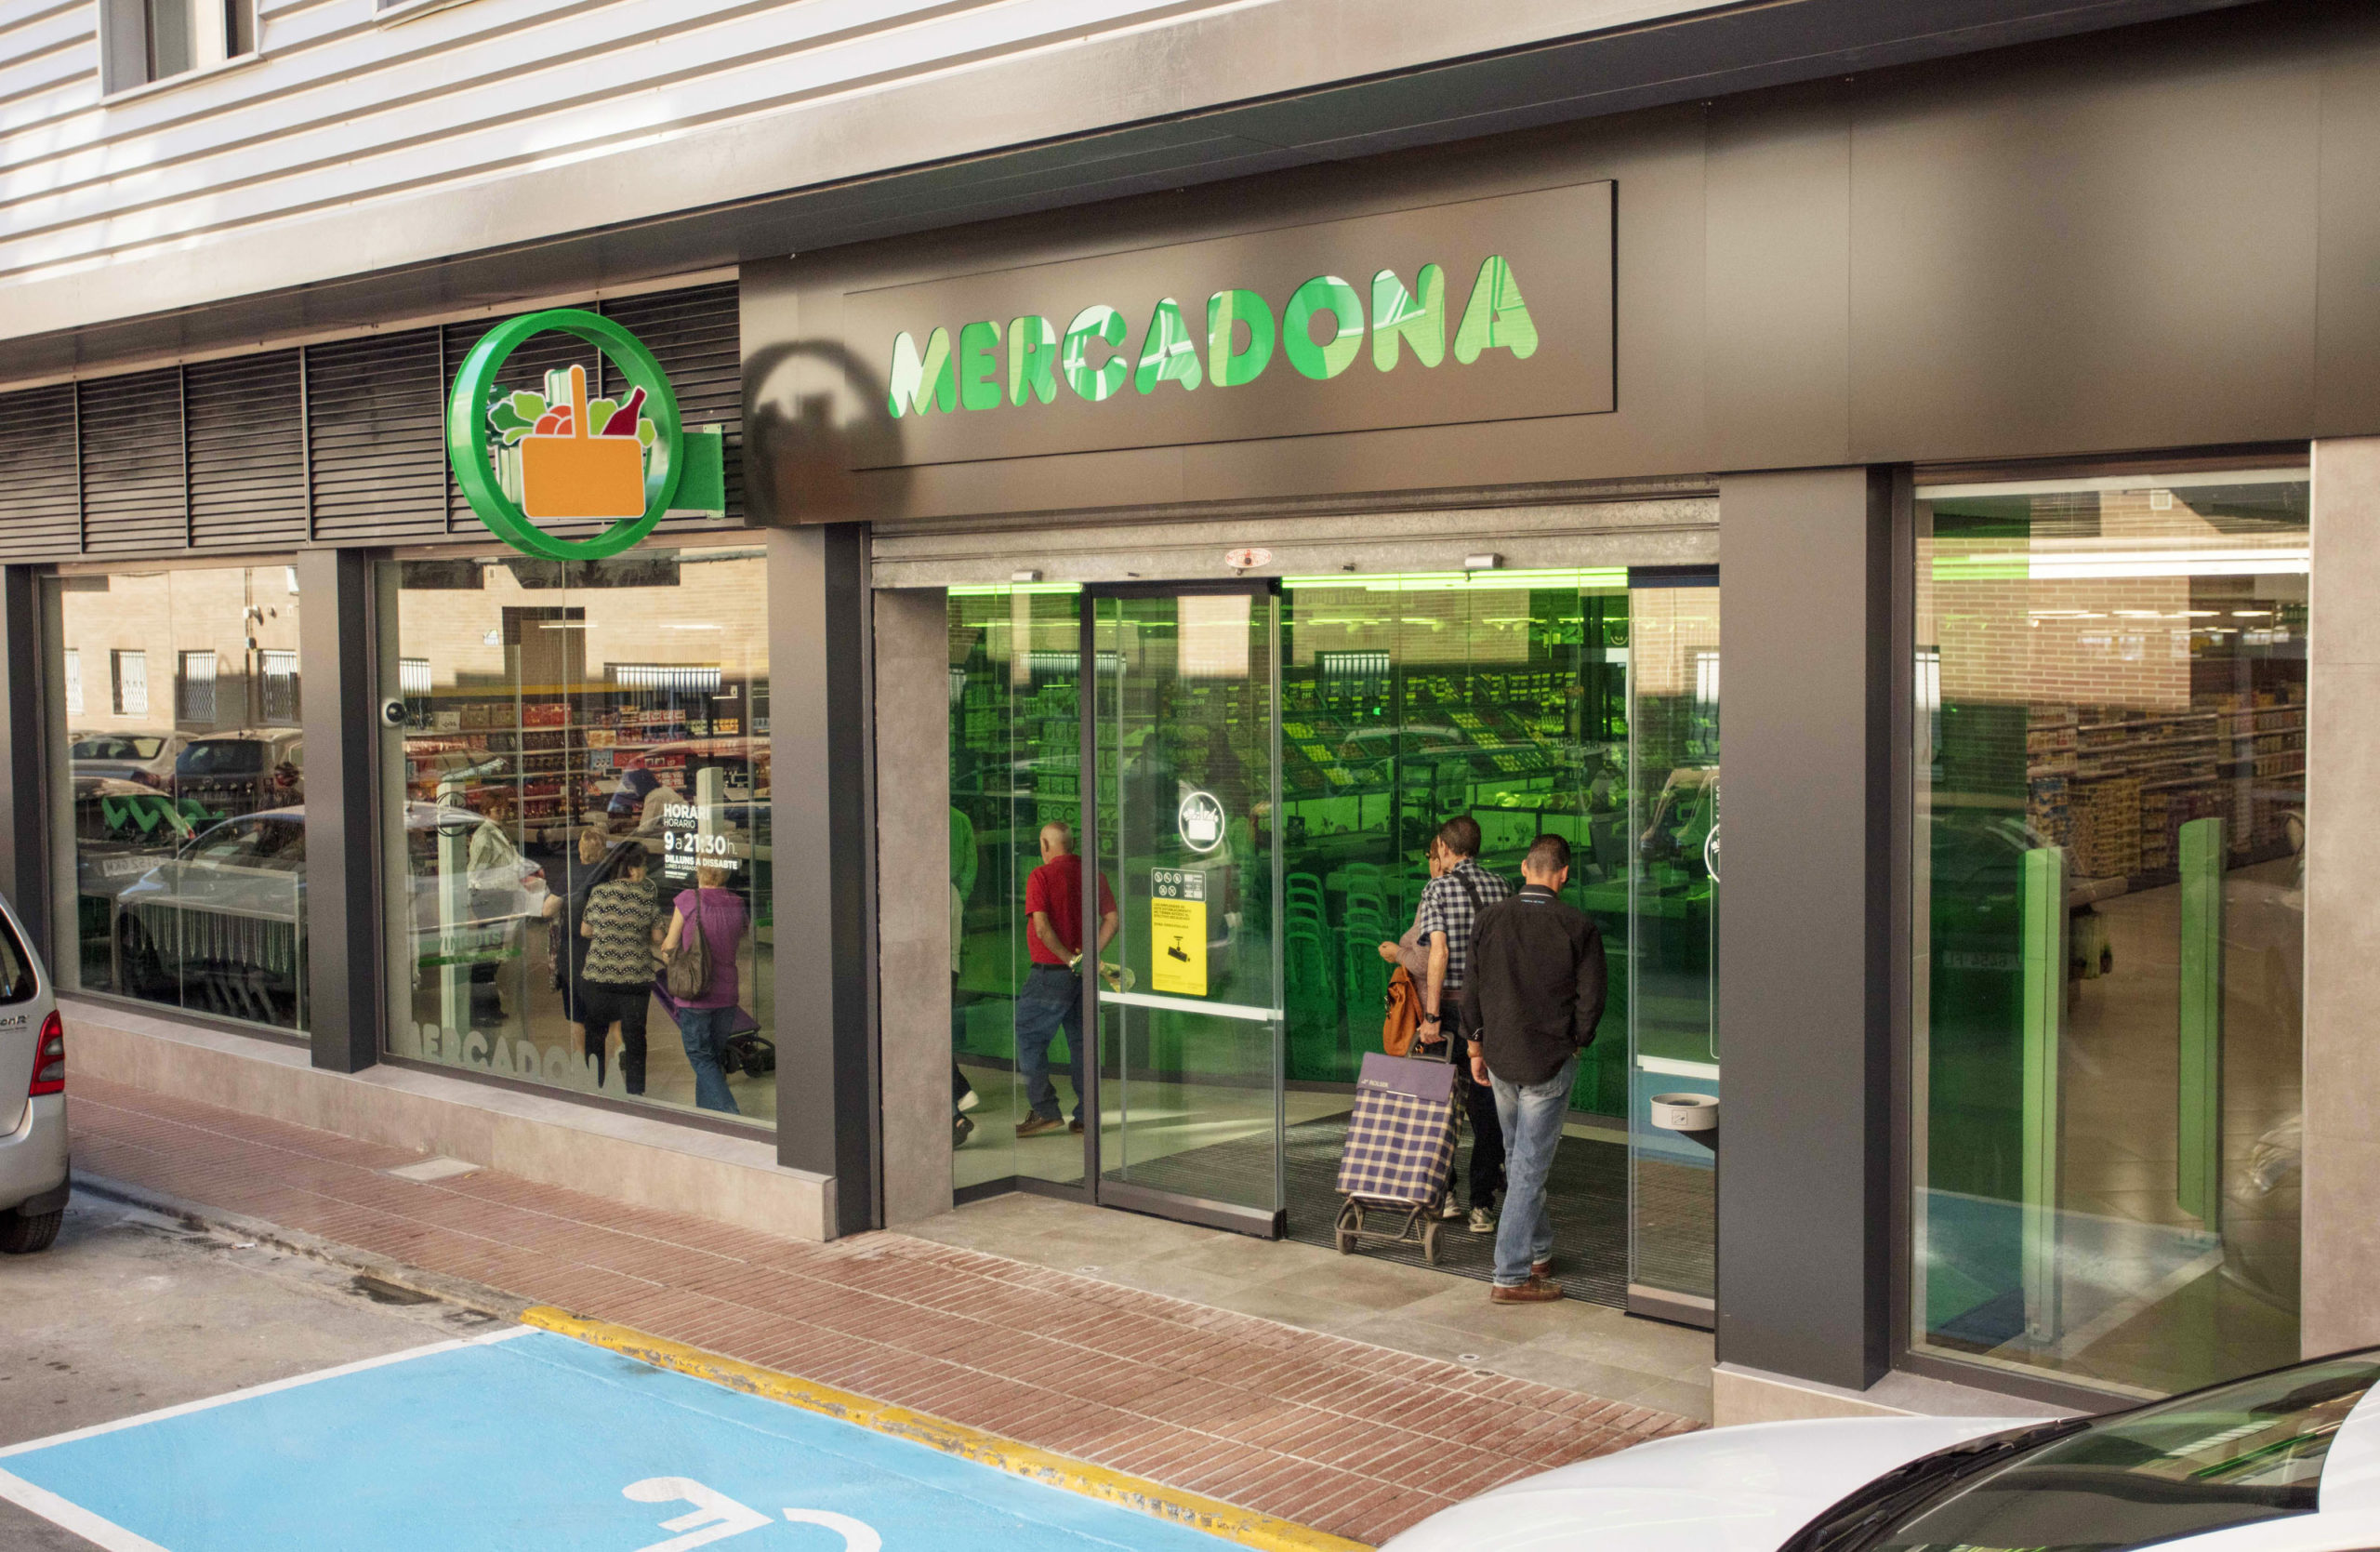 Supermarché Mercadona, où l'emballage Mercadona patatas bravas a été changé